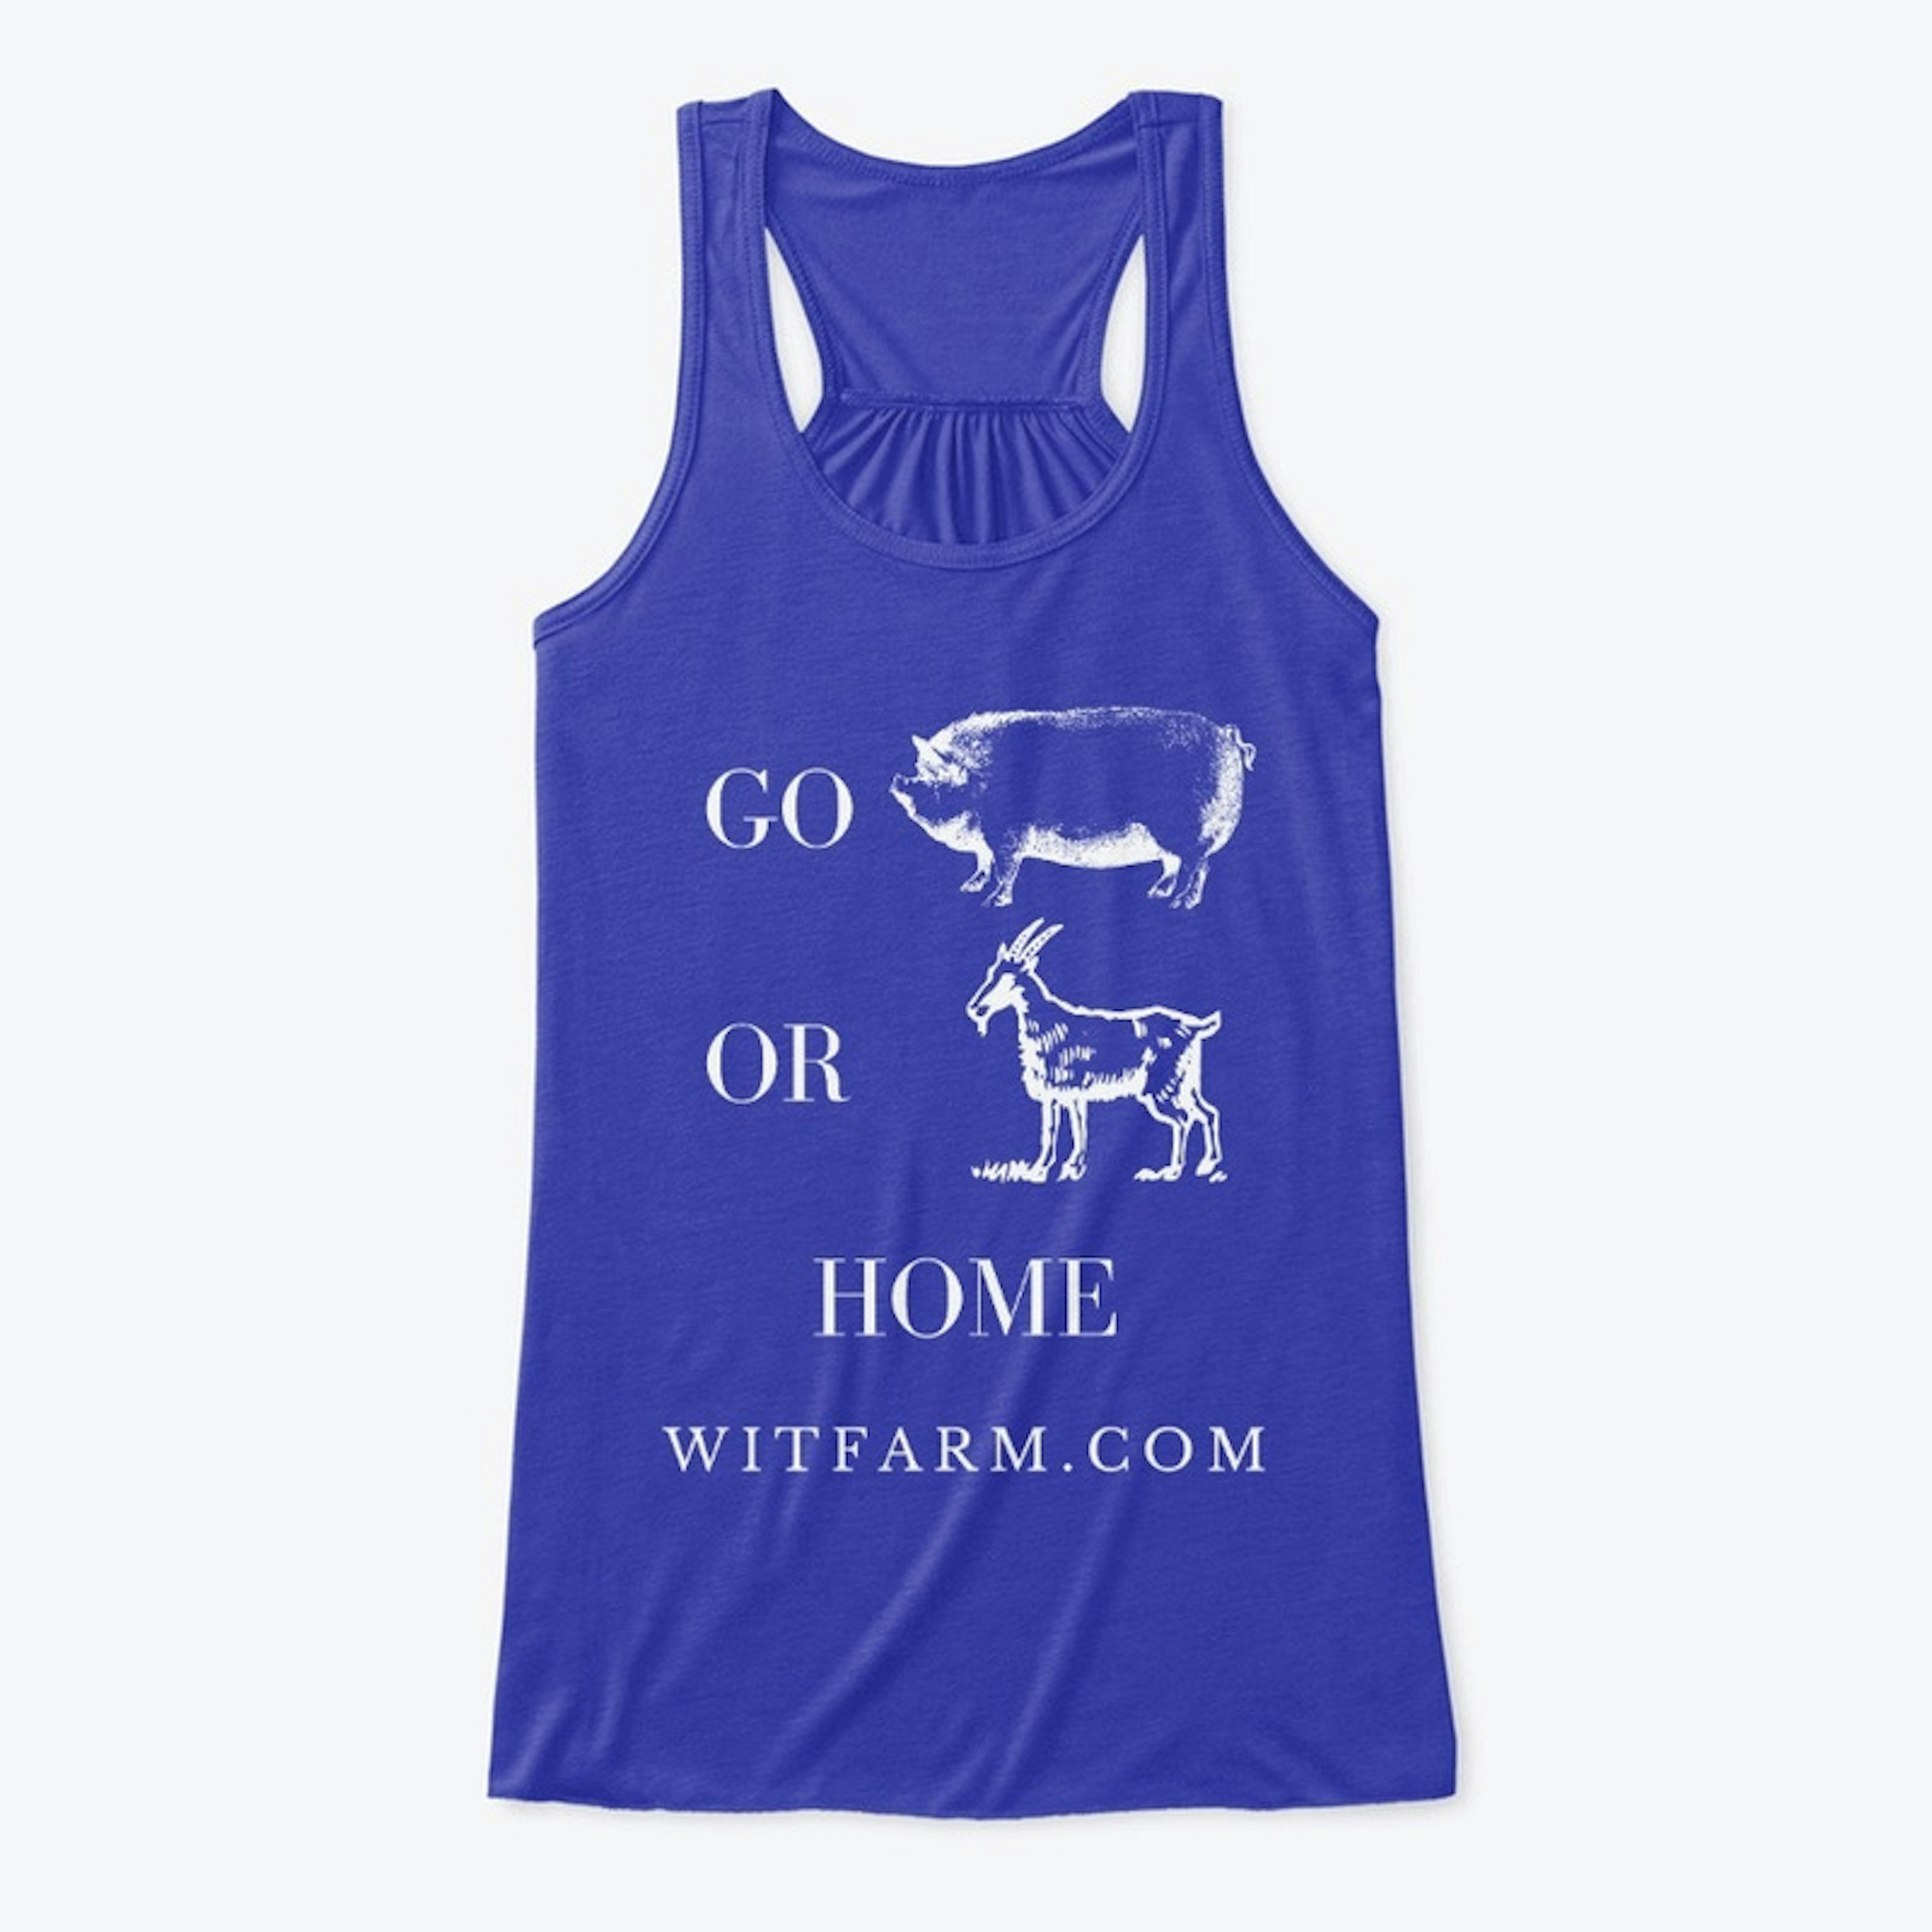 Go Pig or Goat Home